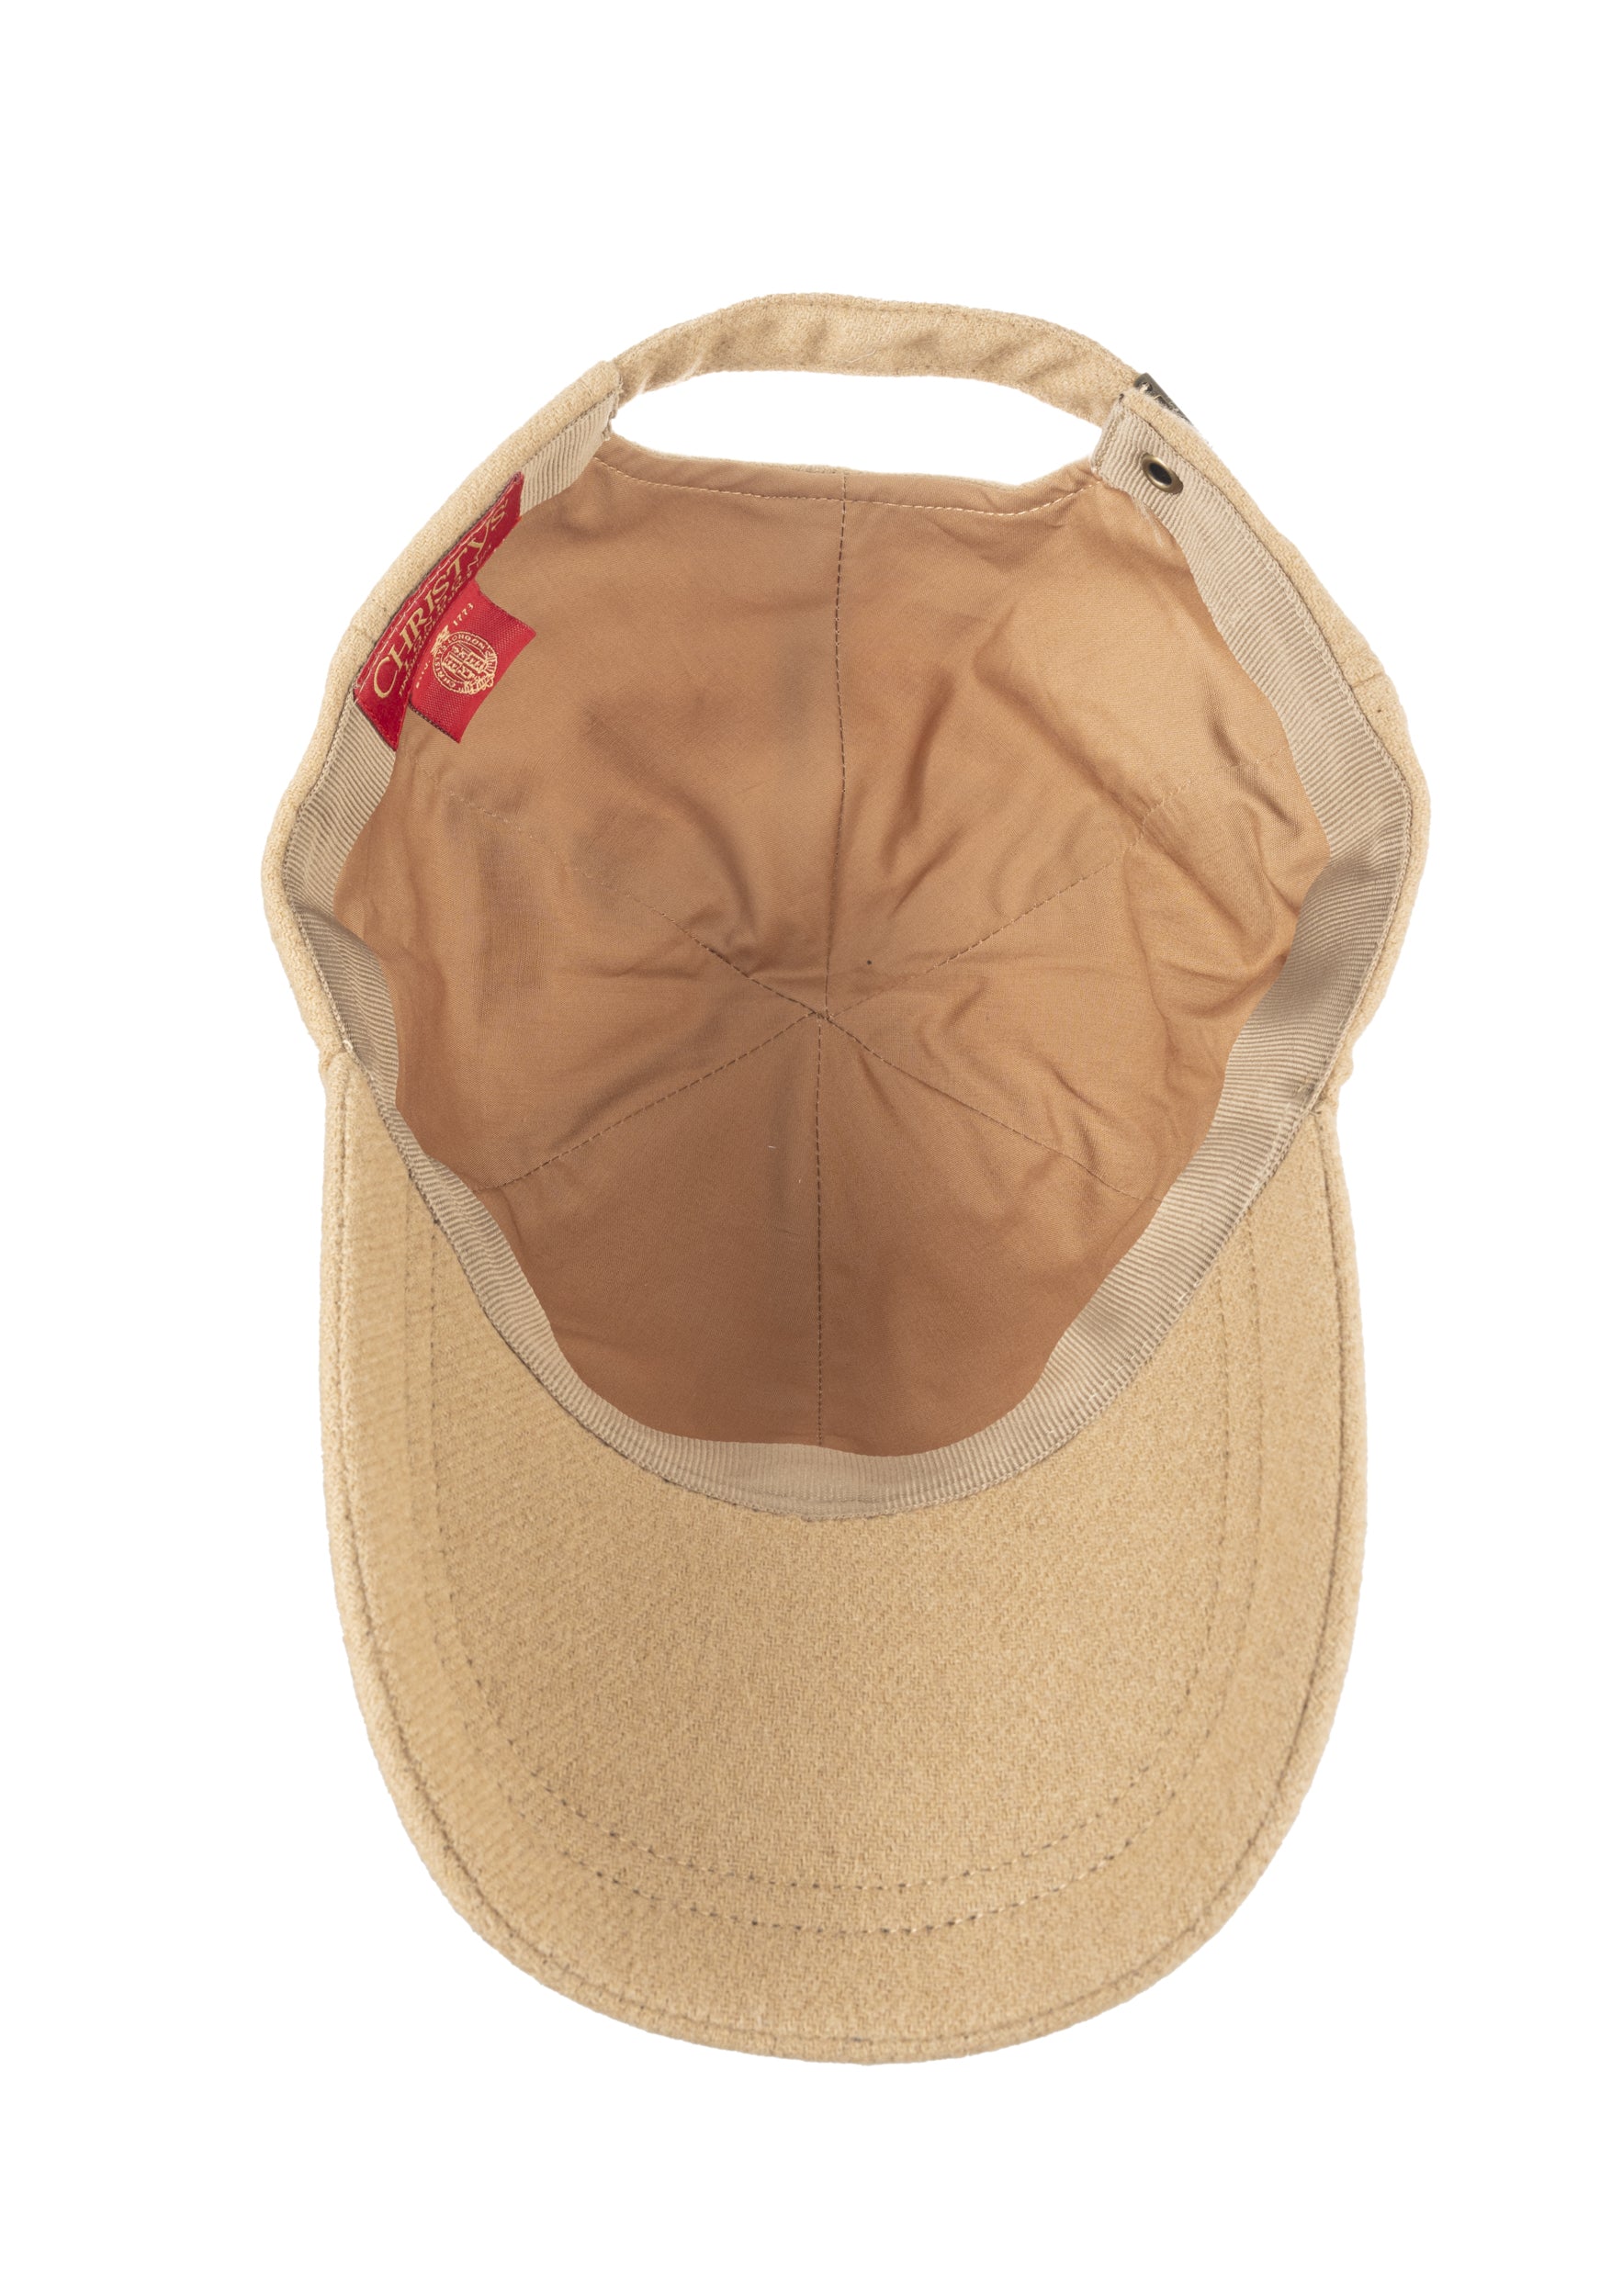 Josh baseball cap in cashmere/wool blend fabric in Camel